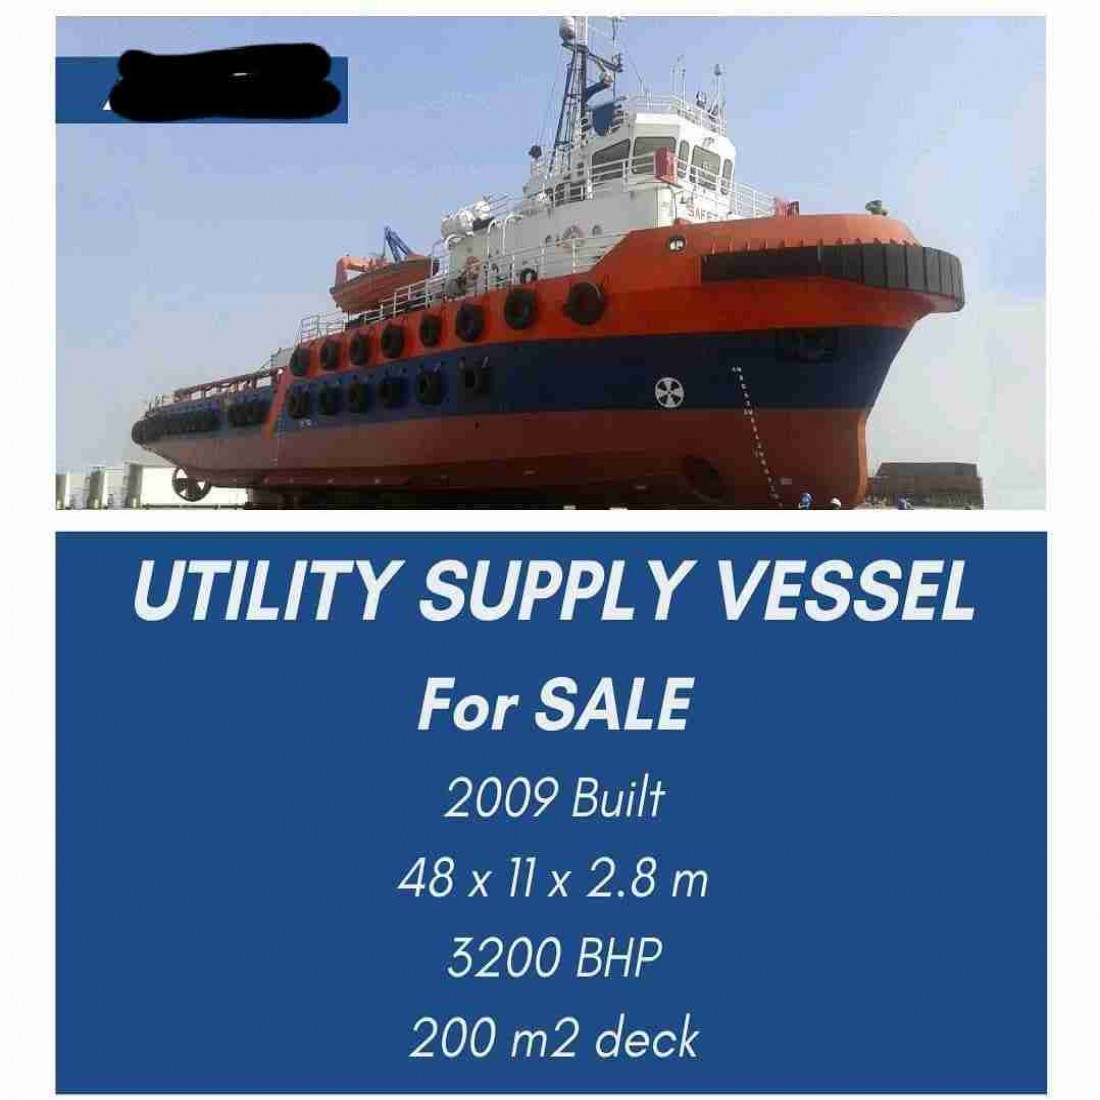 فروش کشتی